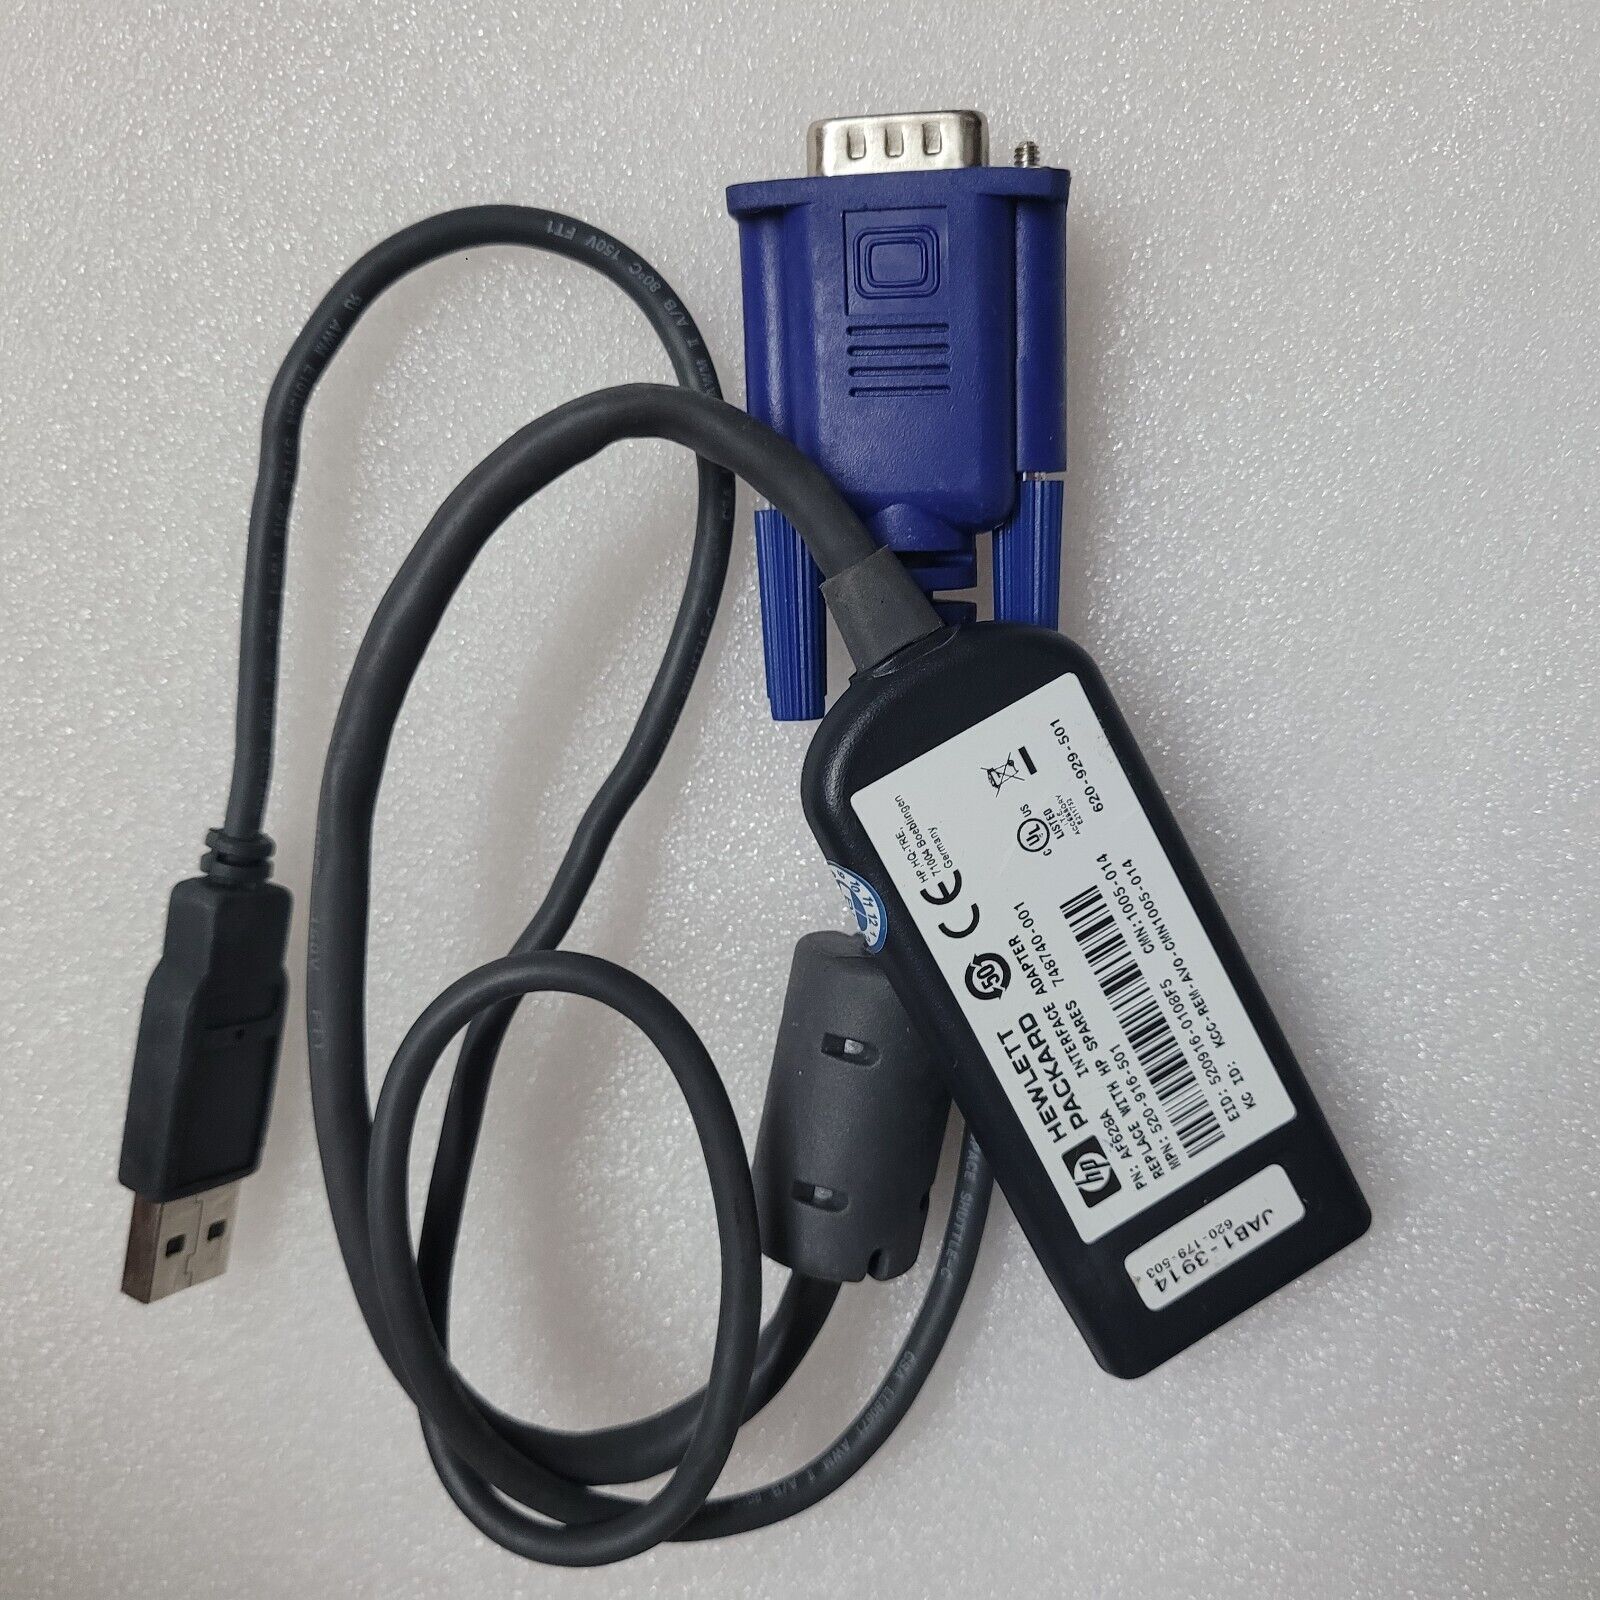 Used HP HPE 748740-001 AF628A USB KVM Switch Module Cable POD SIM CIM